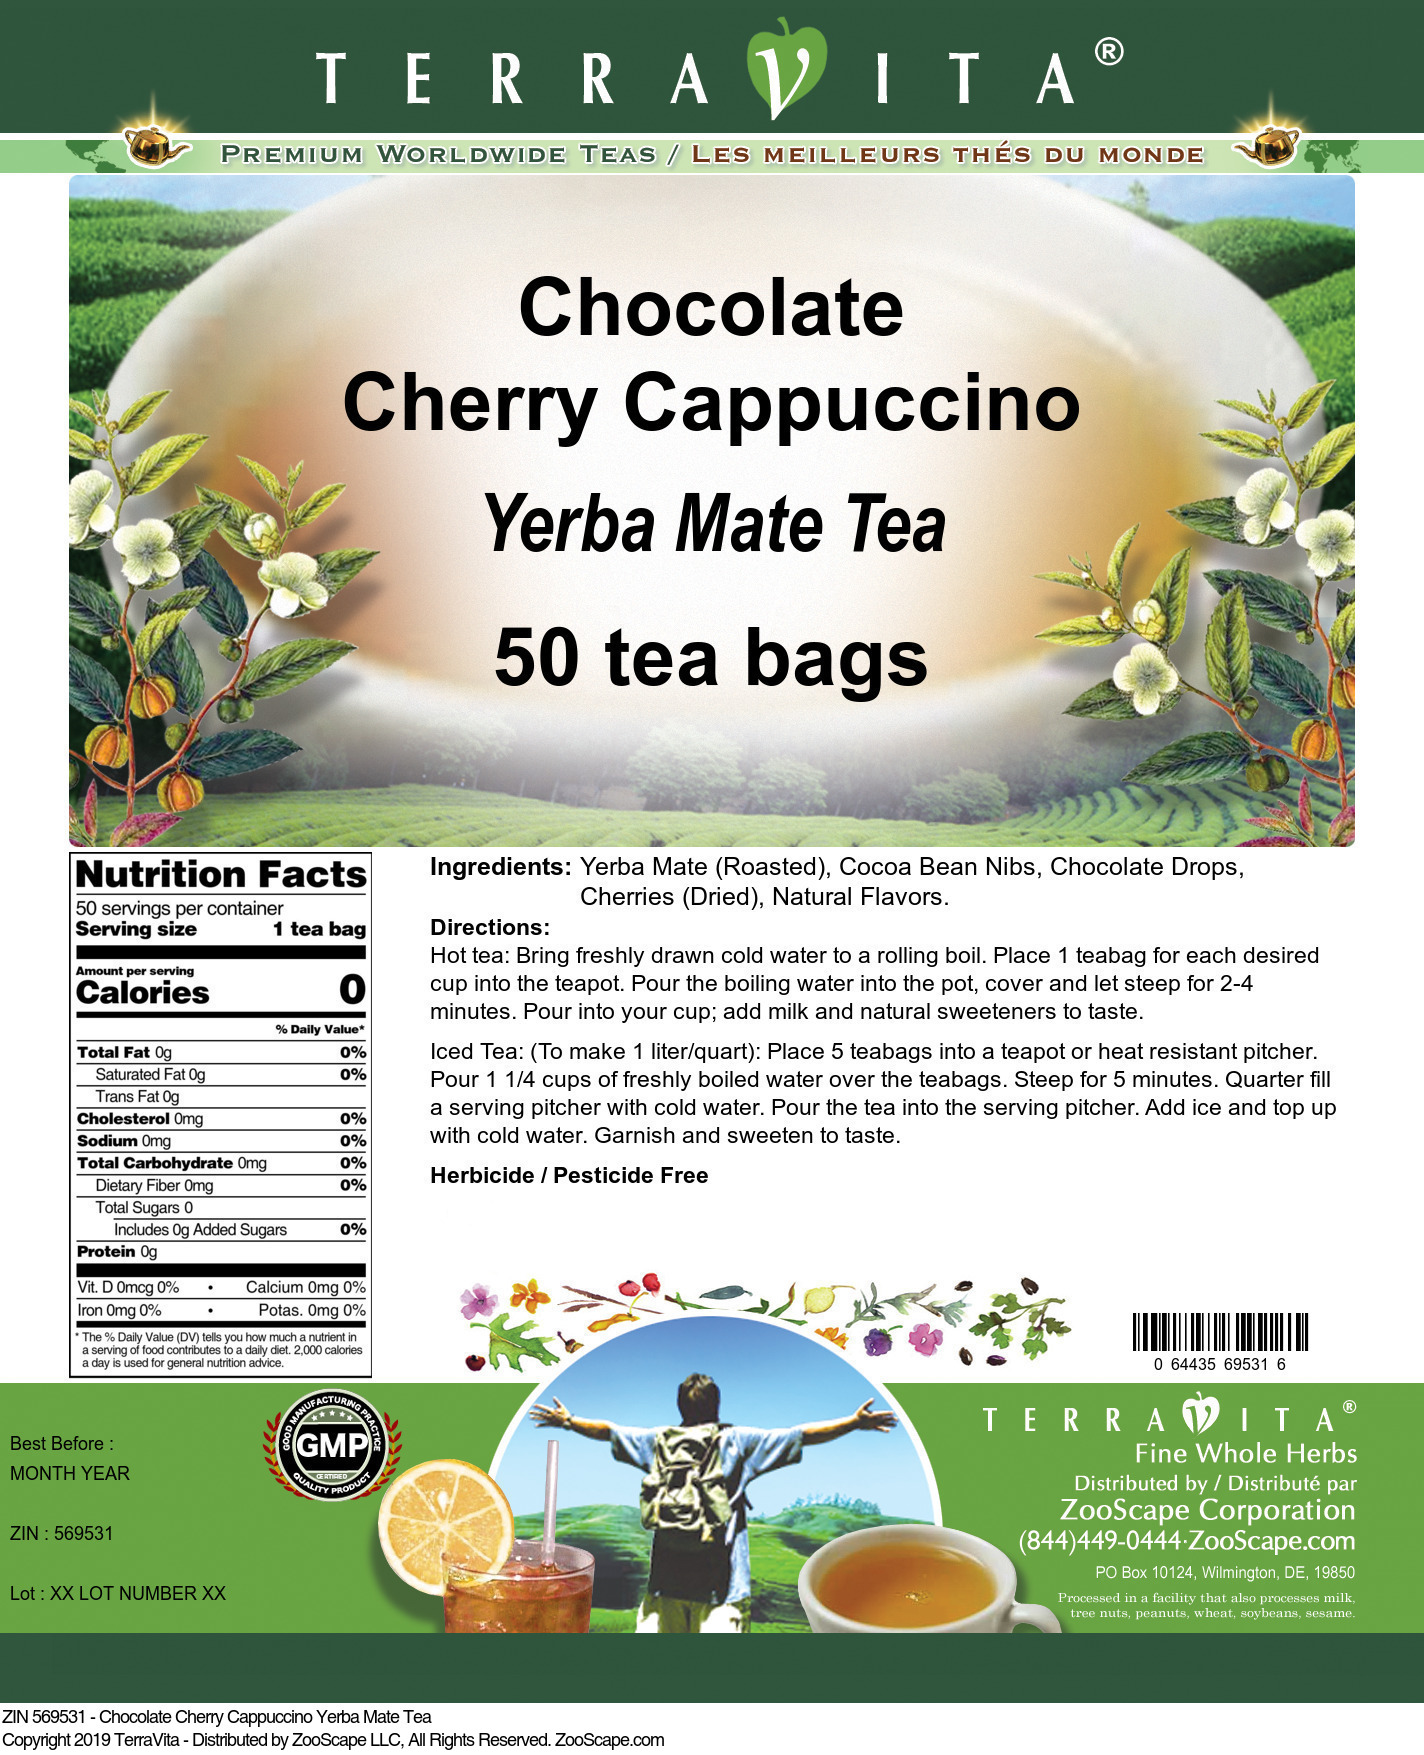 Chocolate Cherry Cappuccino Yerba Mate Tea - Label